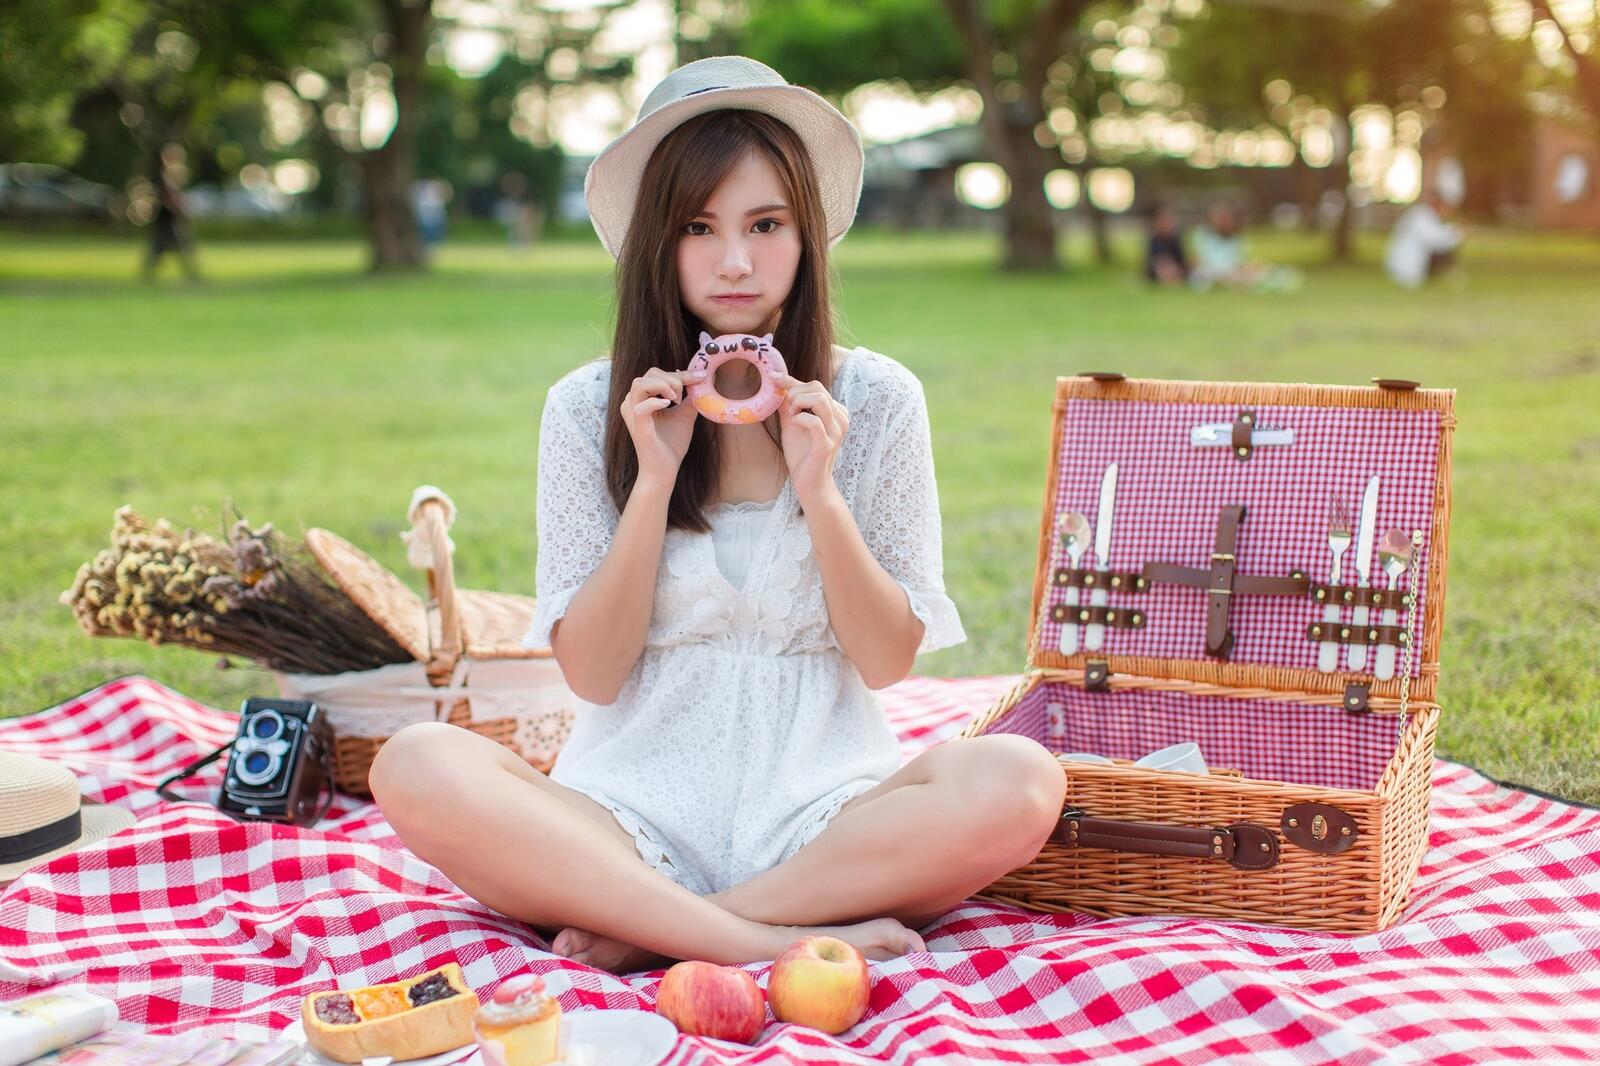 Free photo Asian girl at a picnic eating a donut